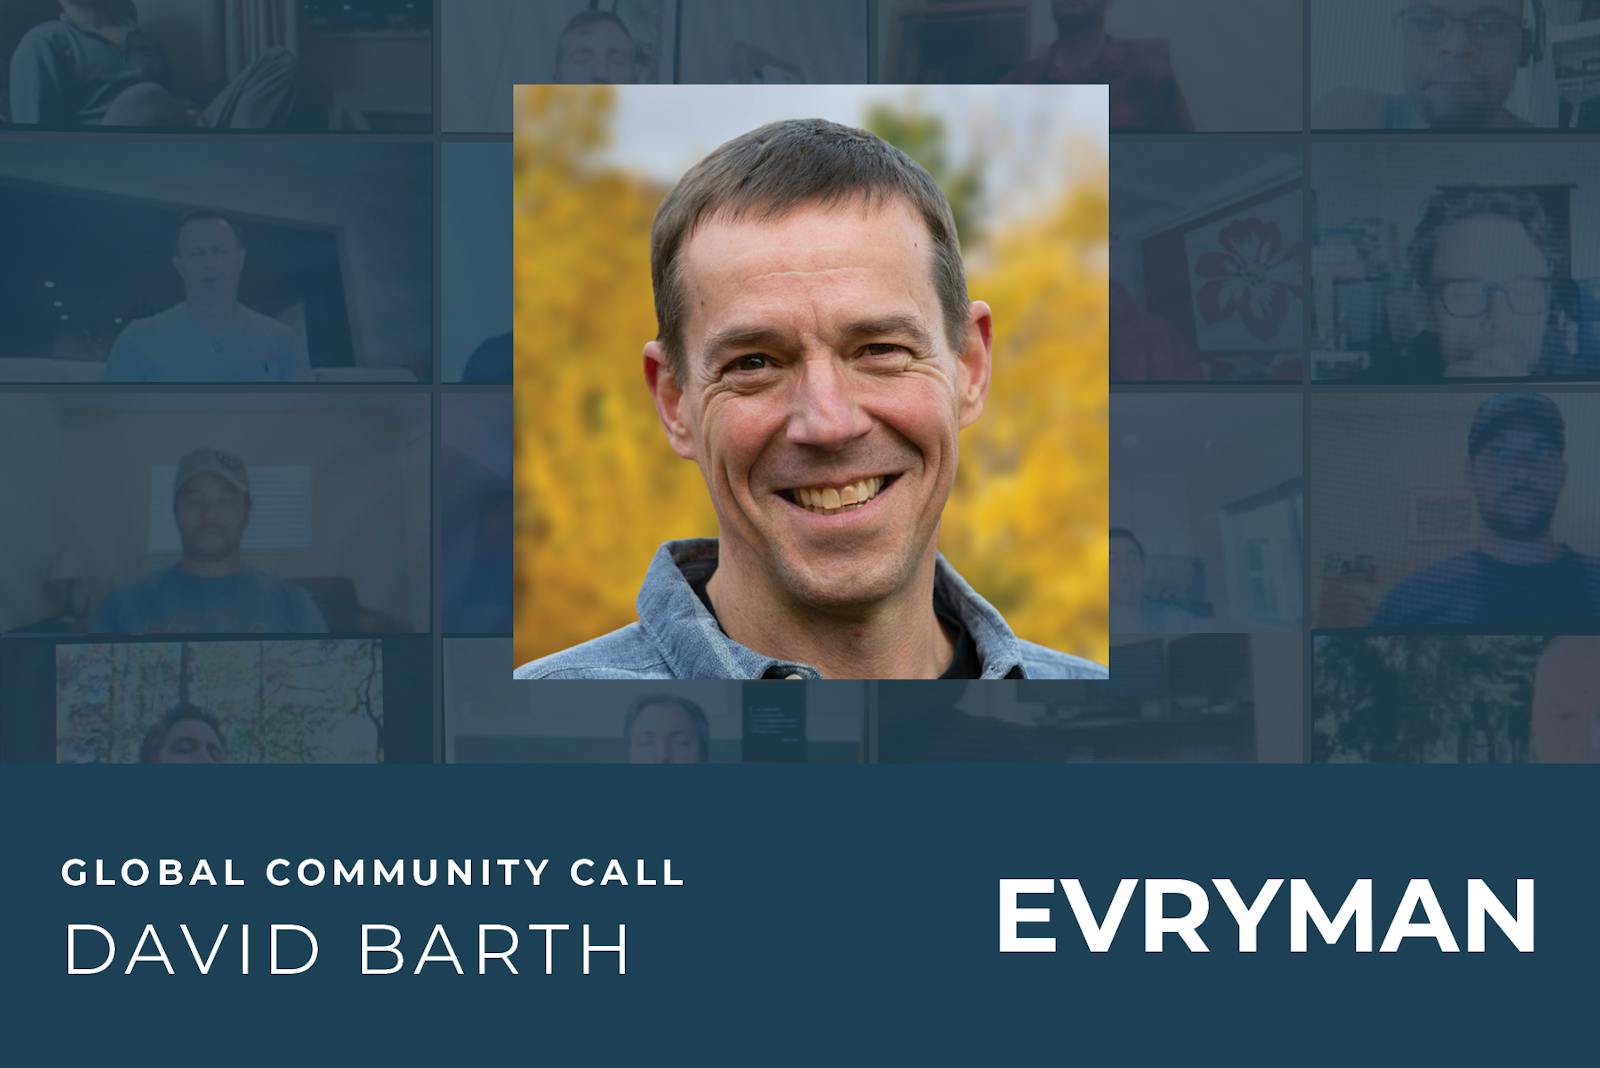 EVRYMAN Global Community Call with special guest David Barth